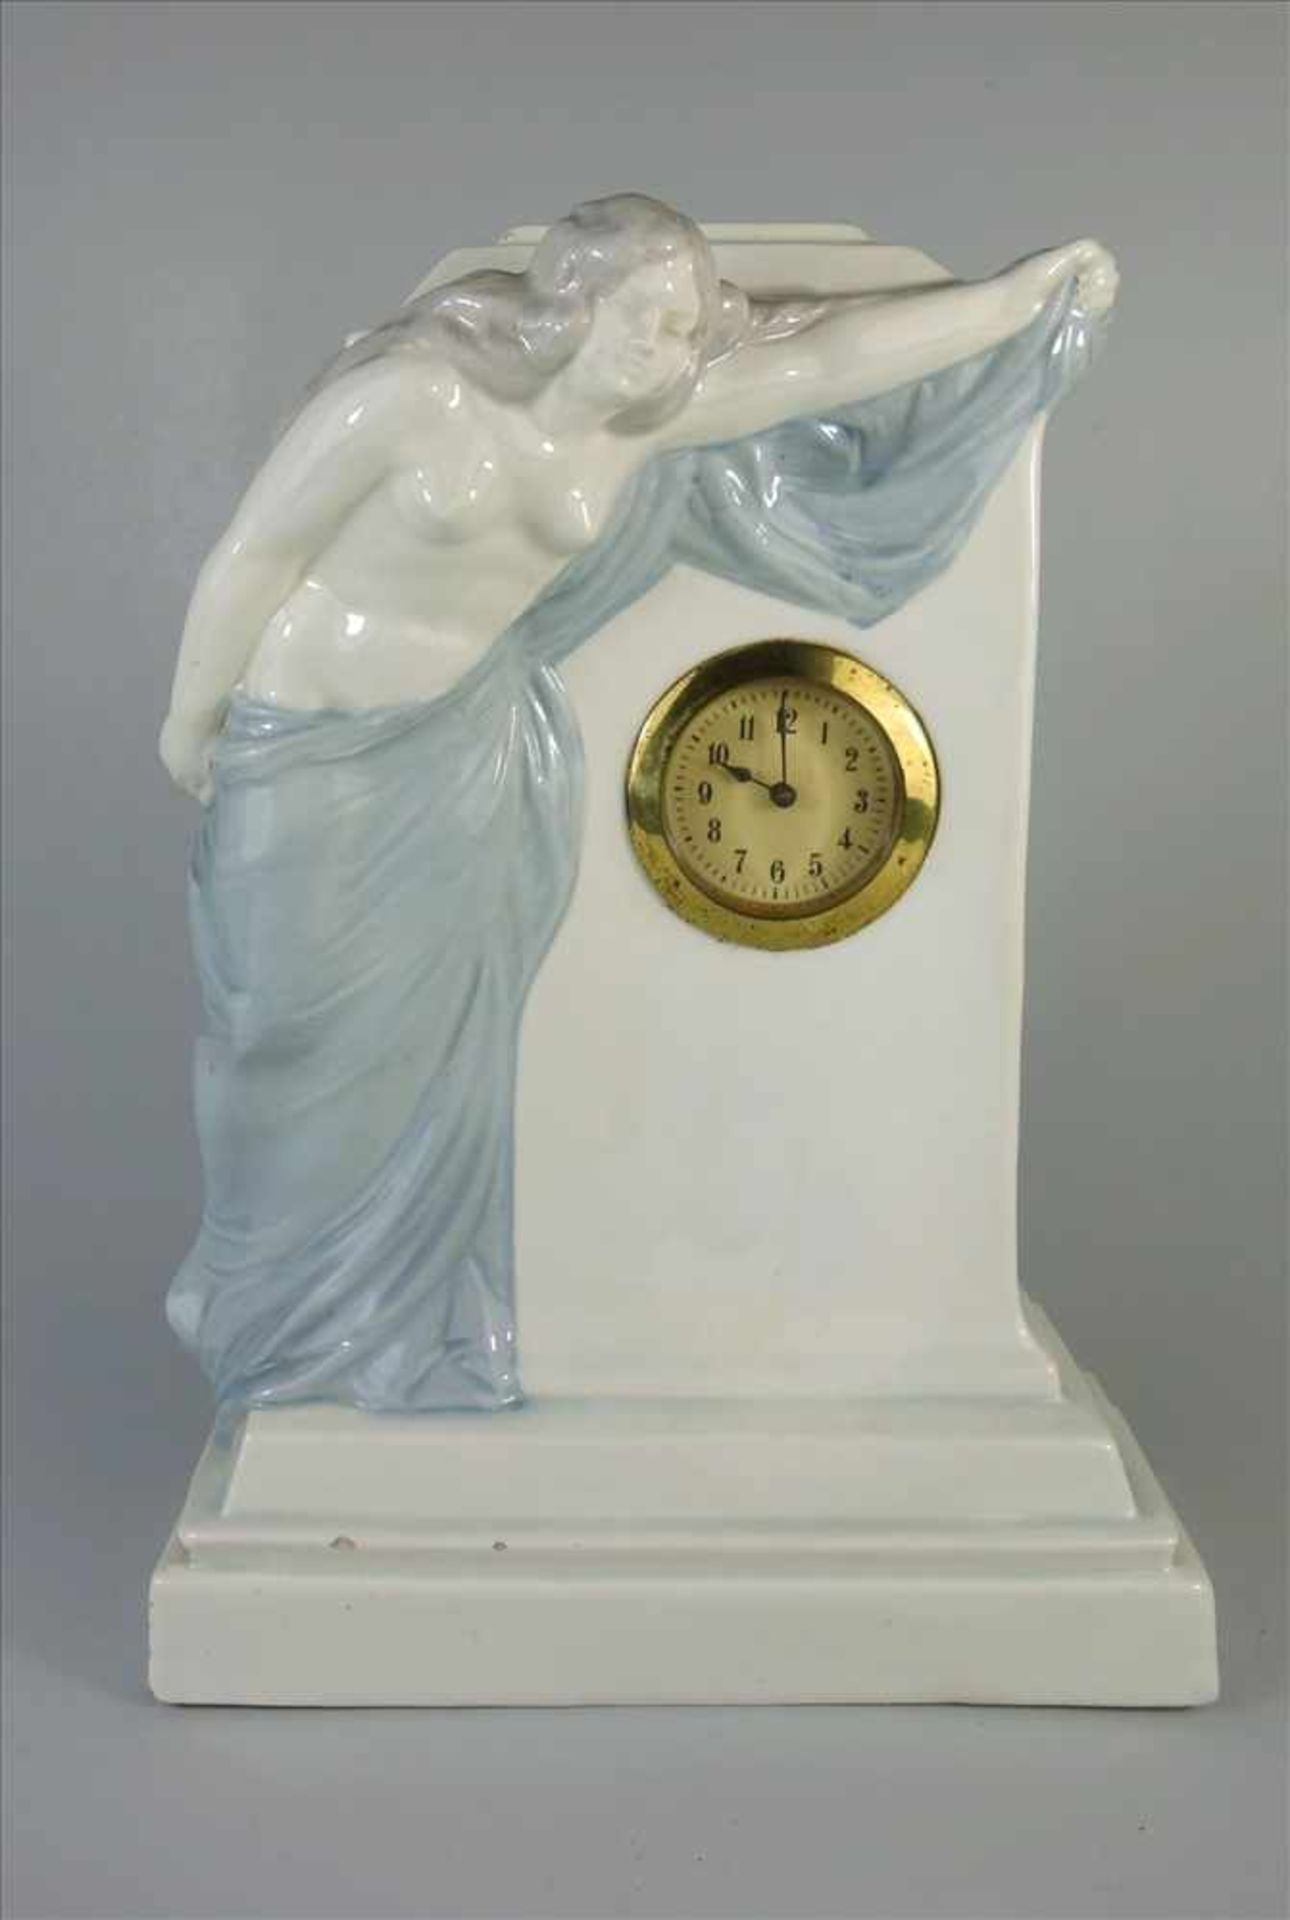 Uhr mit weiblichem Akt, J. Milota (Klentsch/ Klenec / Böhmen), Jugendstil um 1900, grüne Marke: "